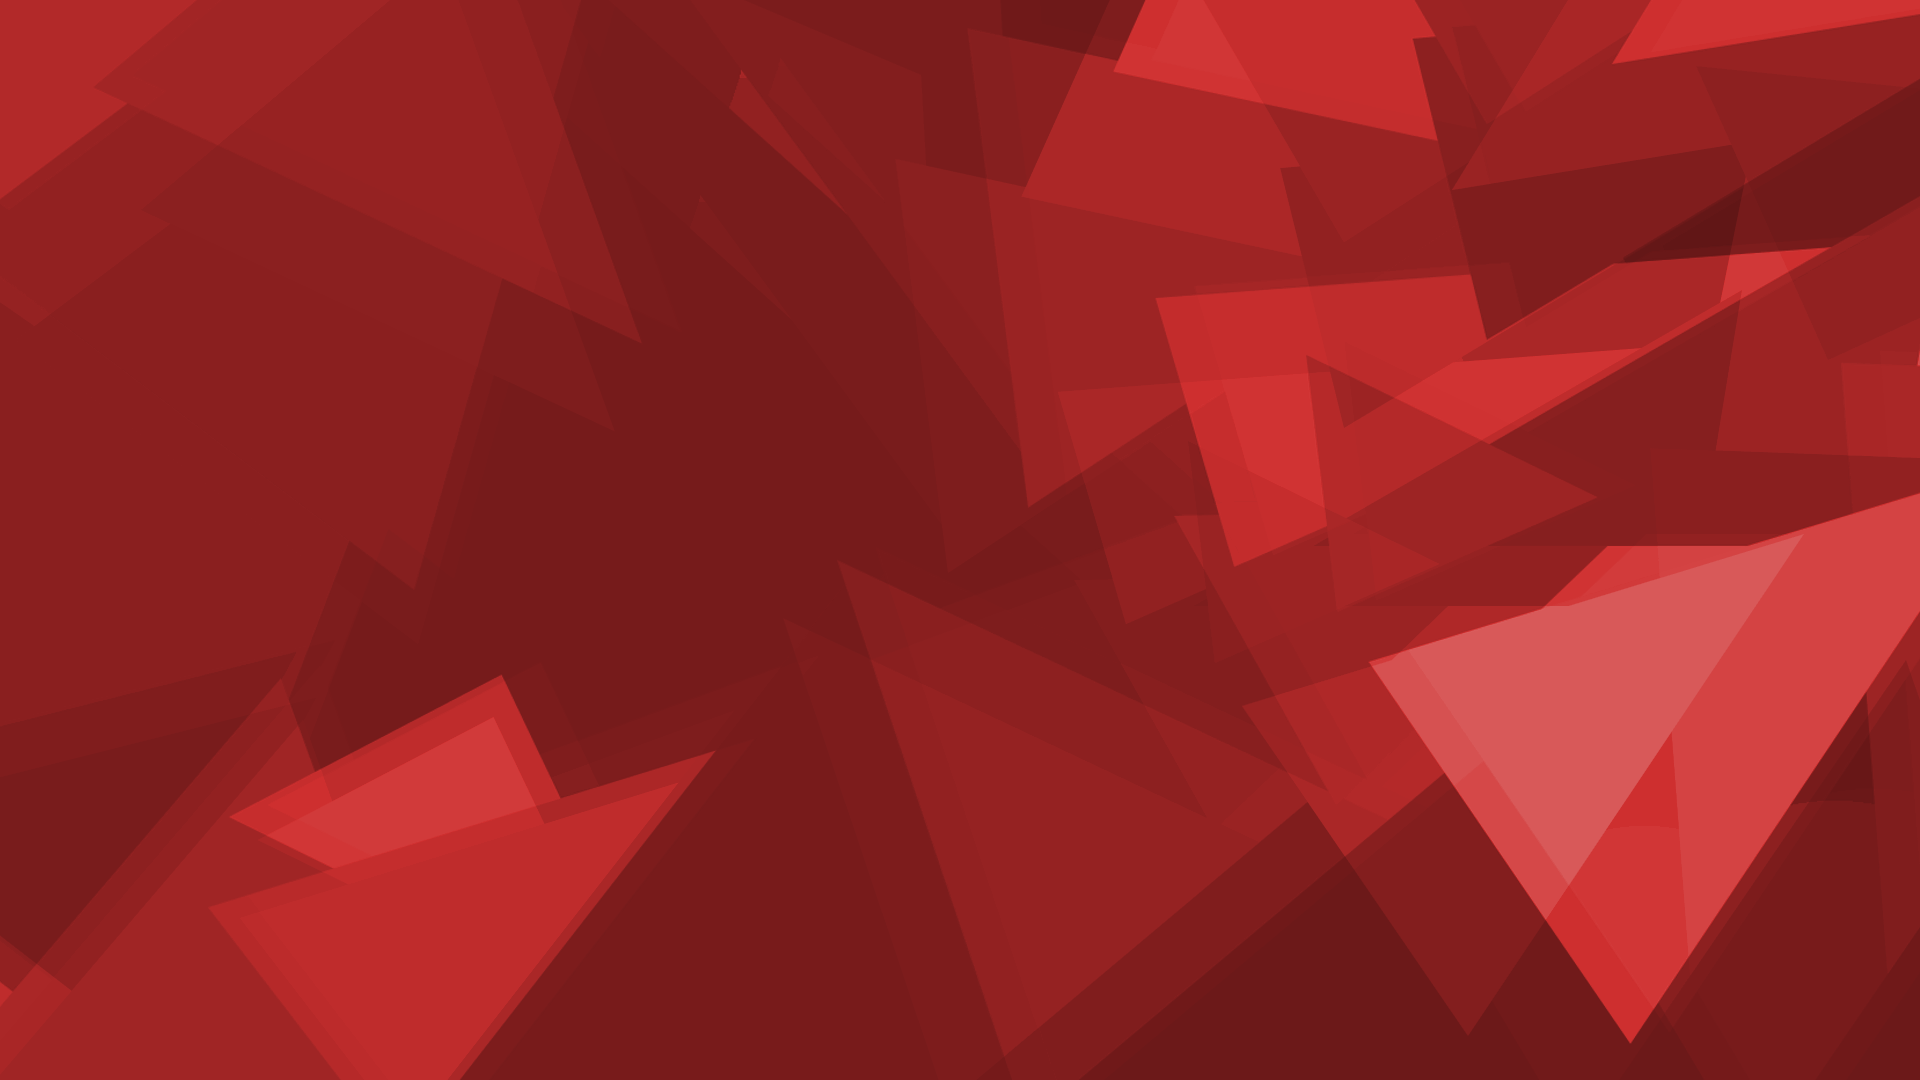 Channel Art Polygonal Background No Logo Red by TheMageOfClockwork on  DeviantArt